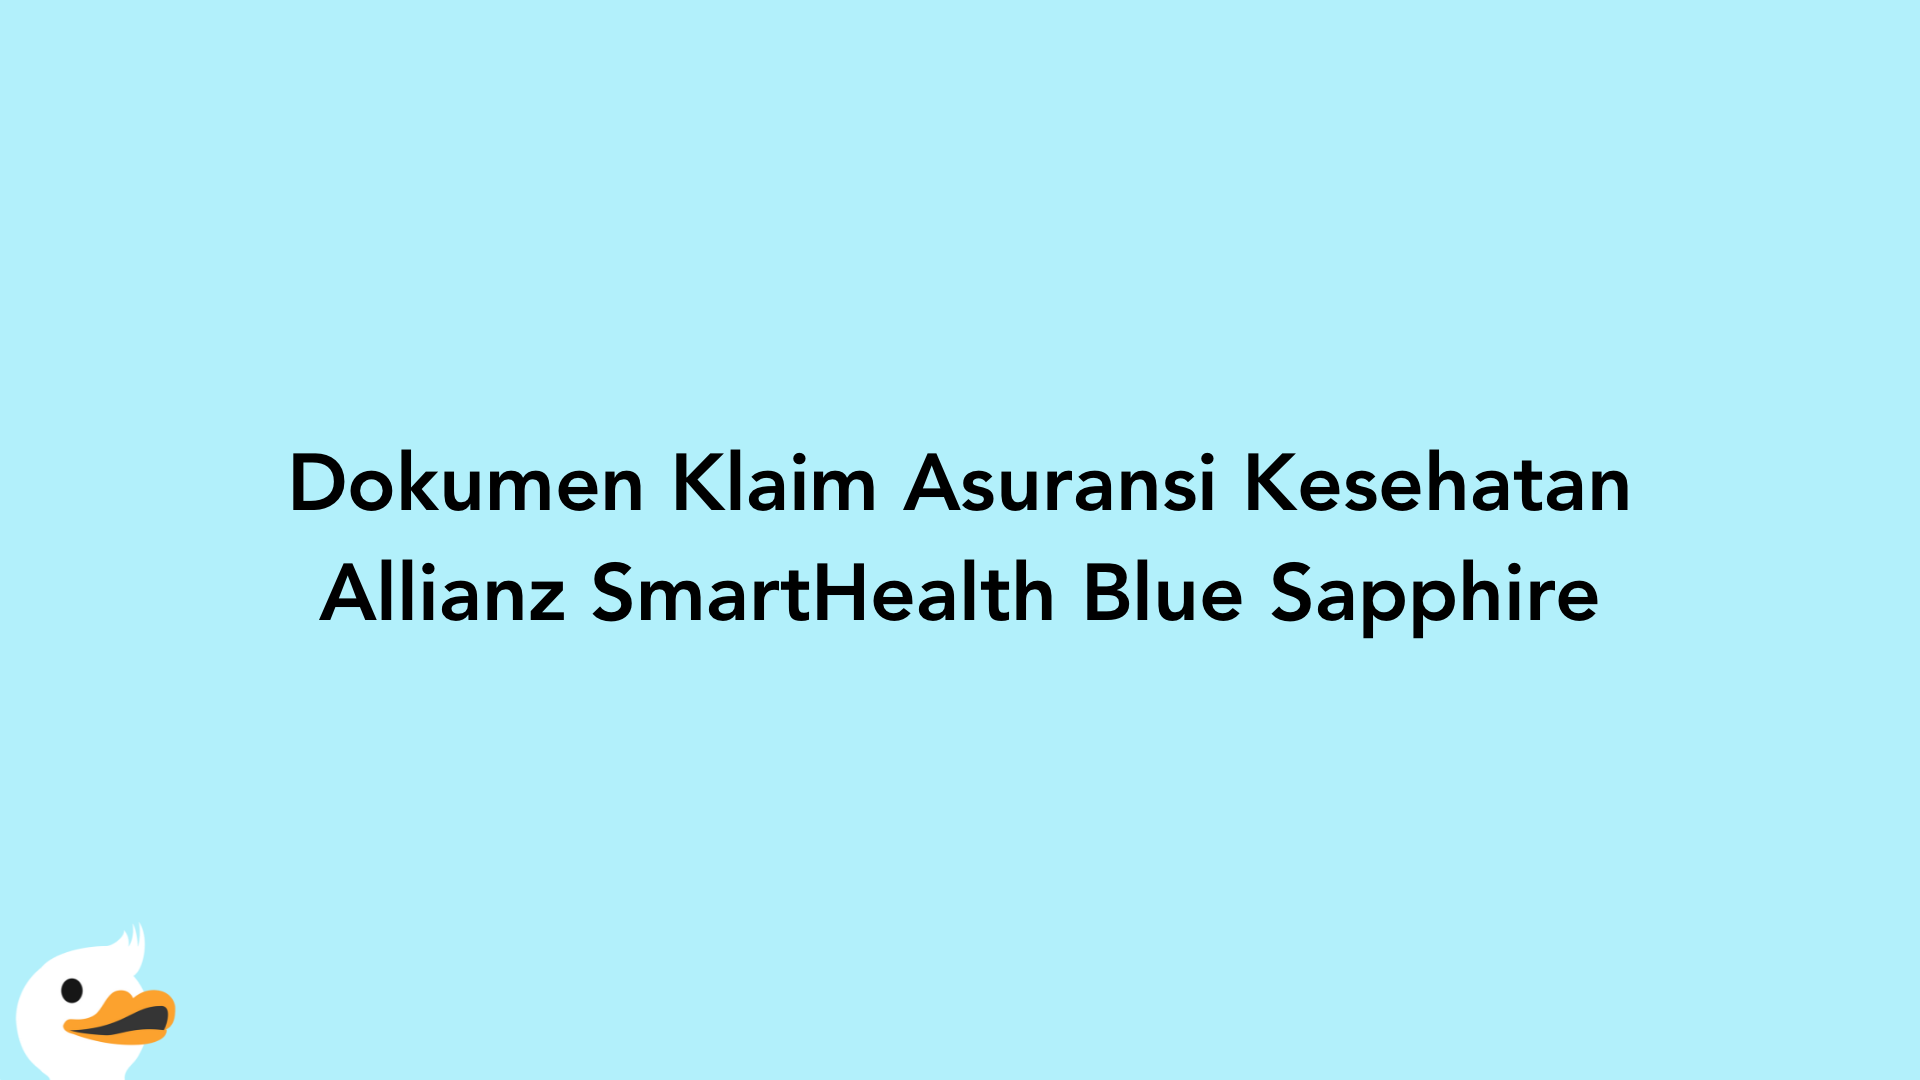 Dokumen Klaim Asuransi Kesehatan Allianz SmartHealth Blue Sapphire